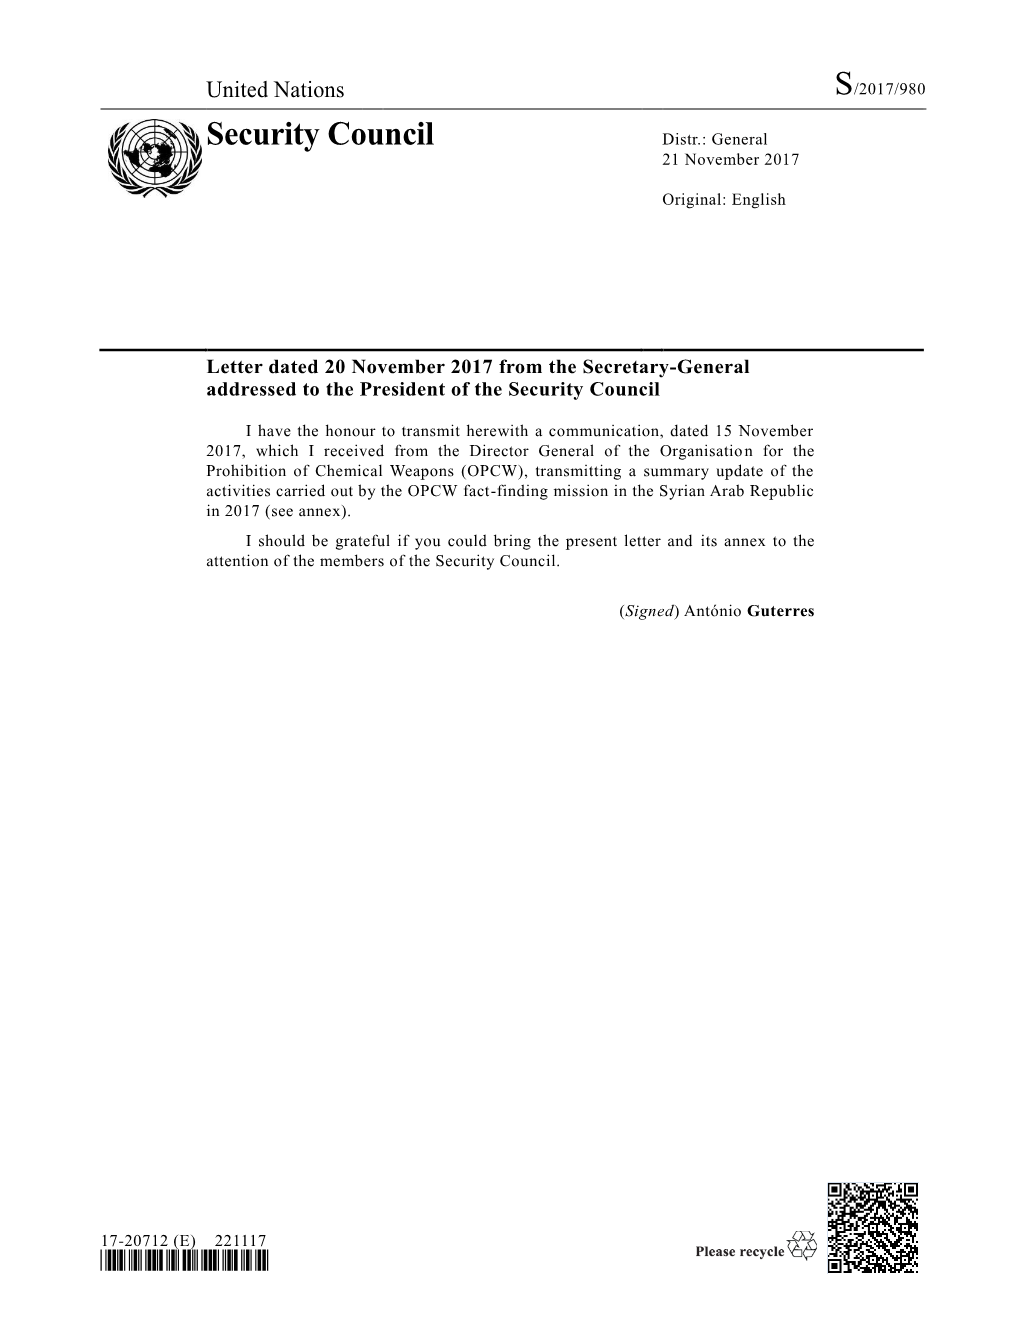 Security Council Distr.: General 21 November 2017